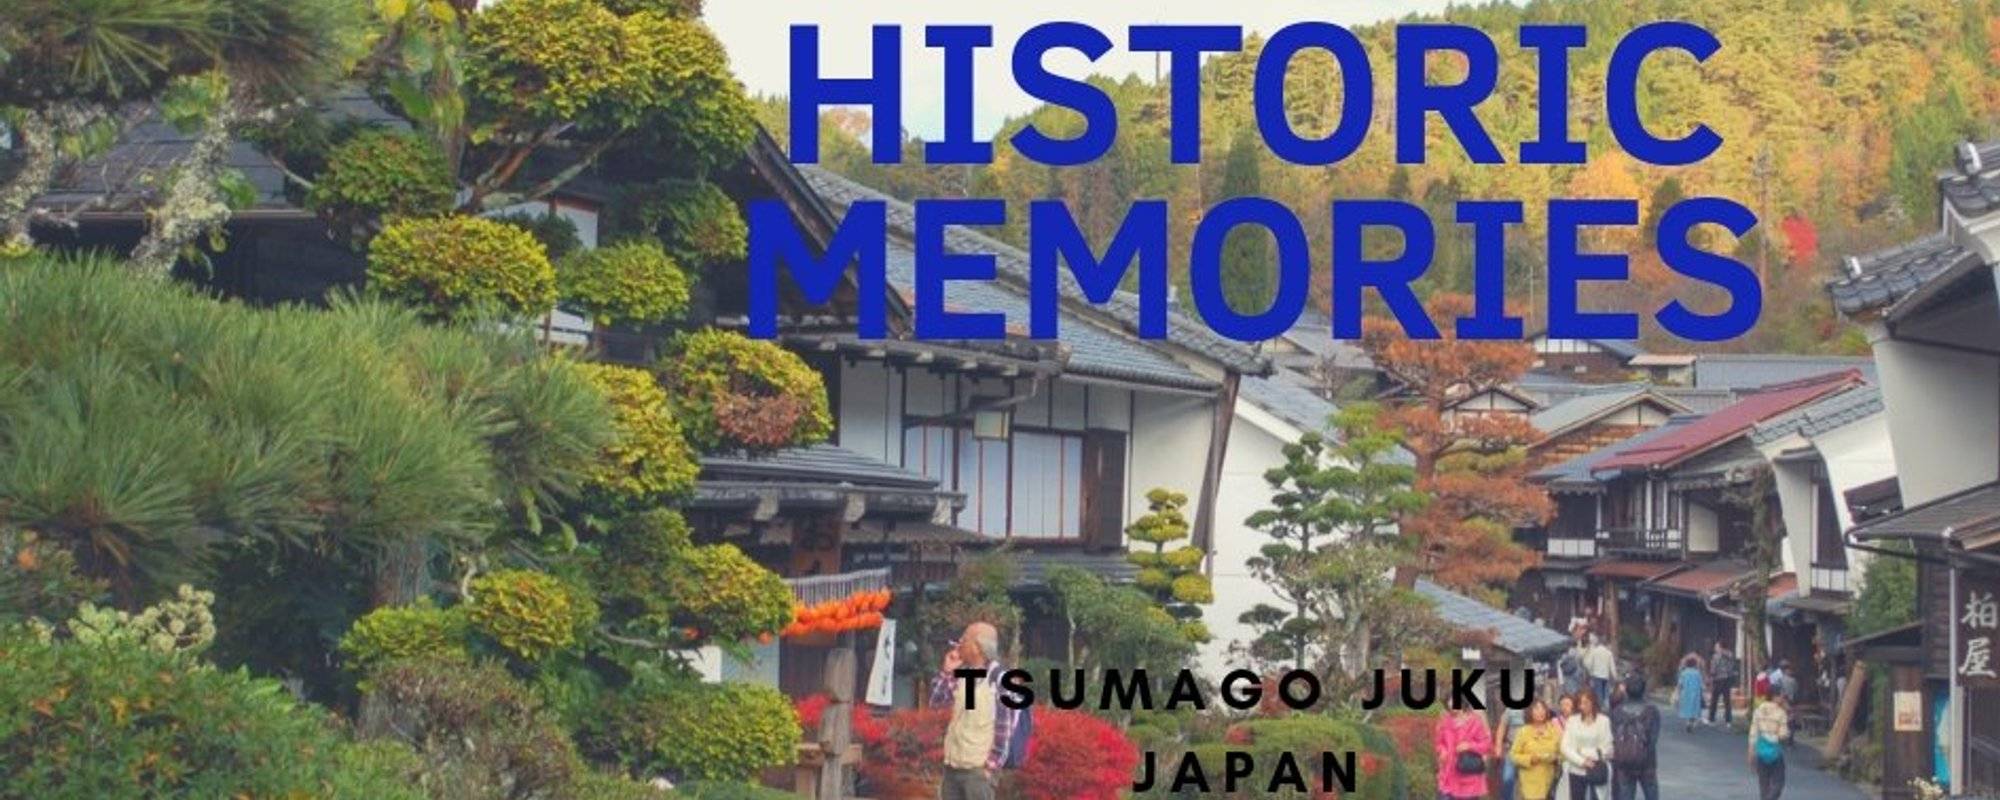 Historic memories - Tsumago juku  江戶時代的風貌